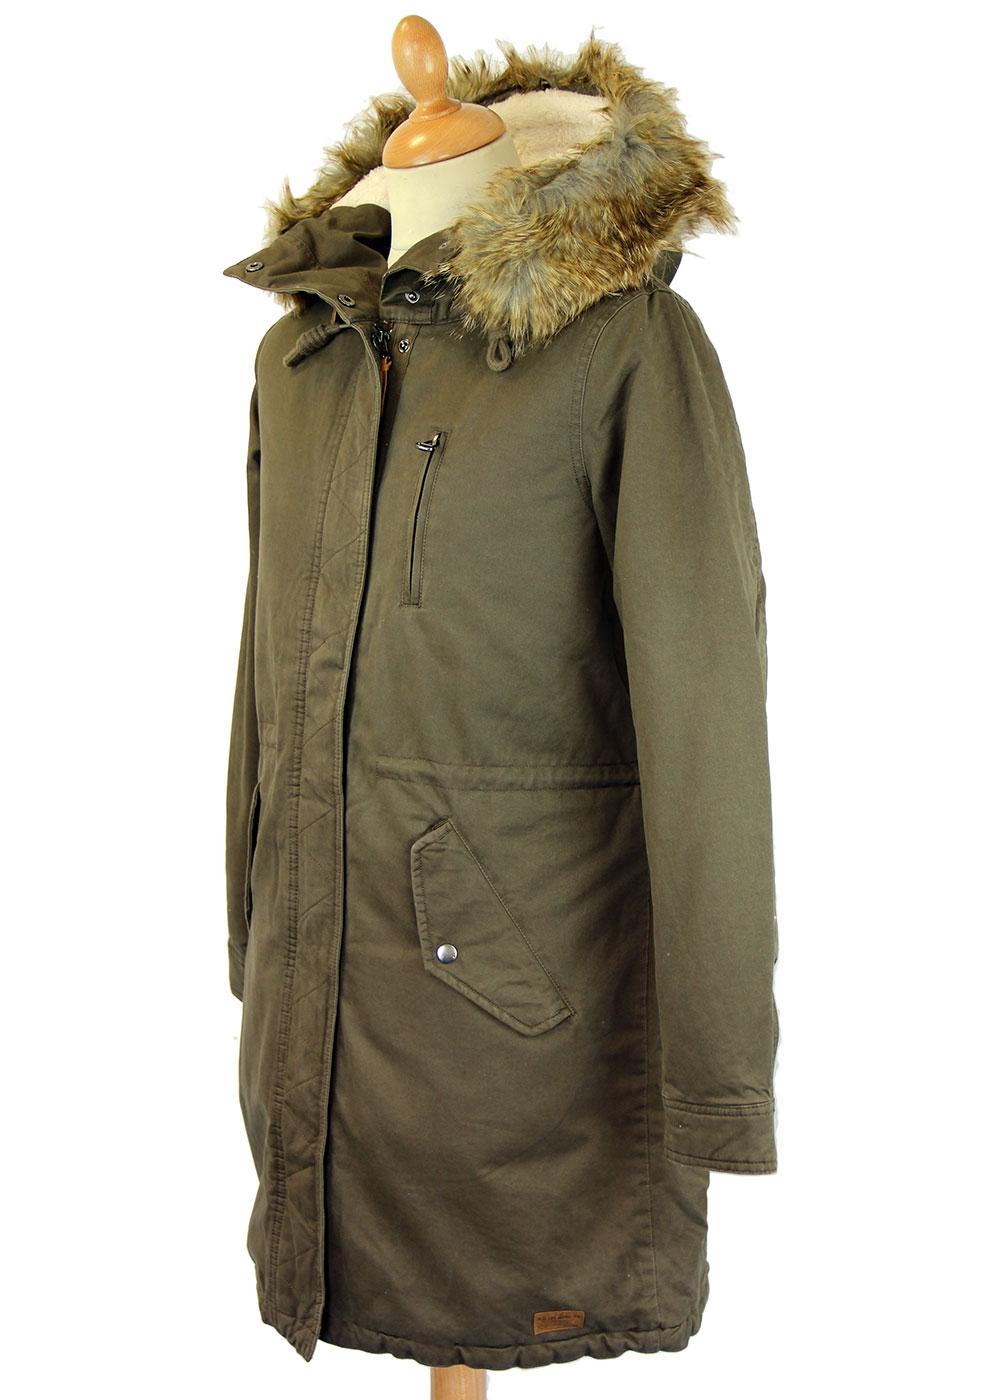 LEE Parka Retro 60s Mod Fleece Lined Hooded Parka Jacket